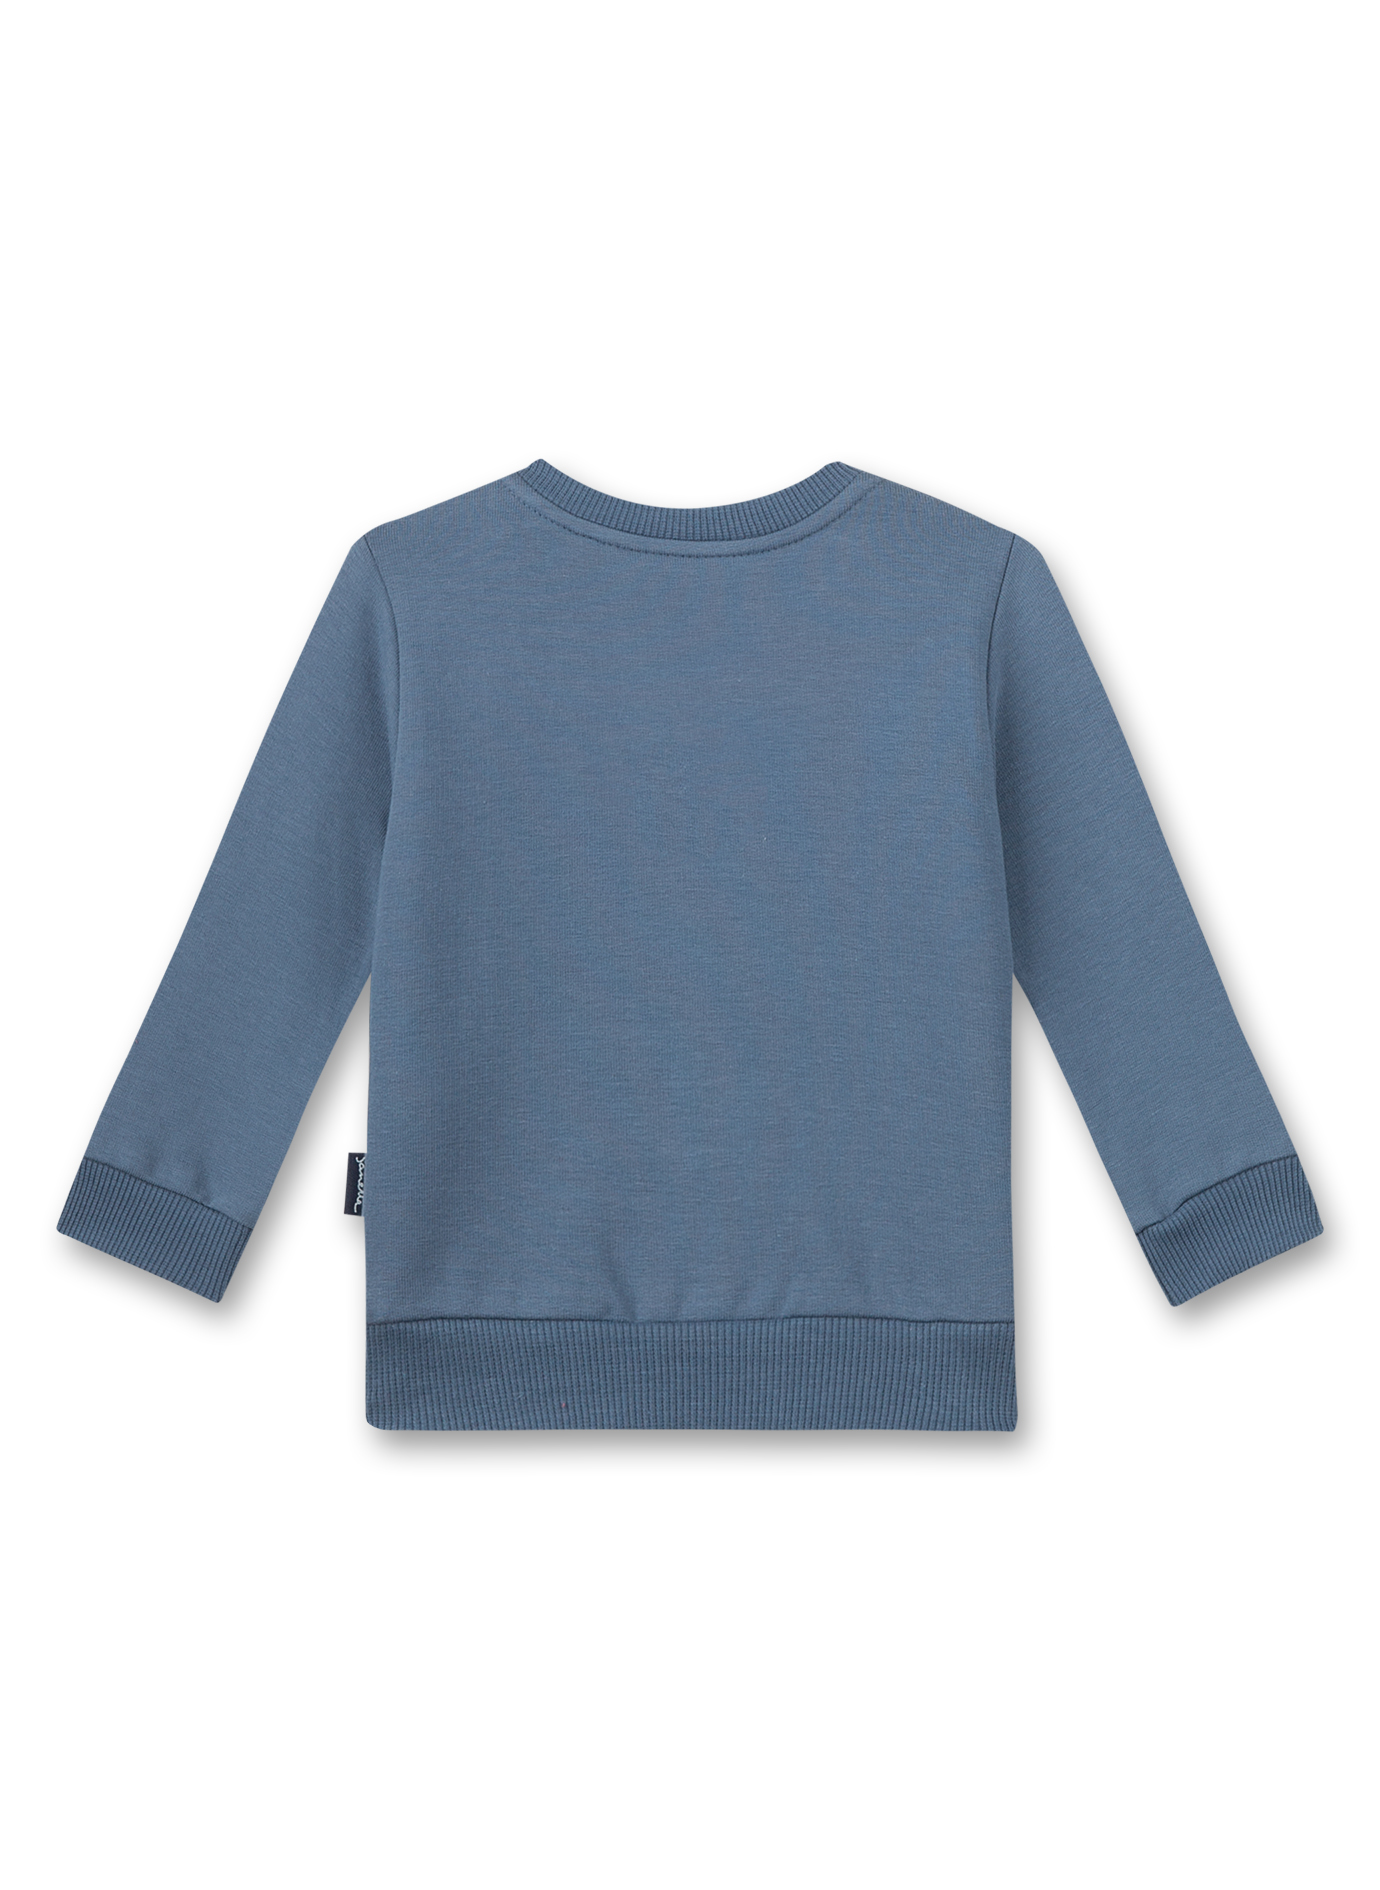 Jungen-Sweatshirt Blau 